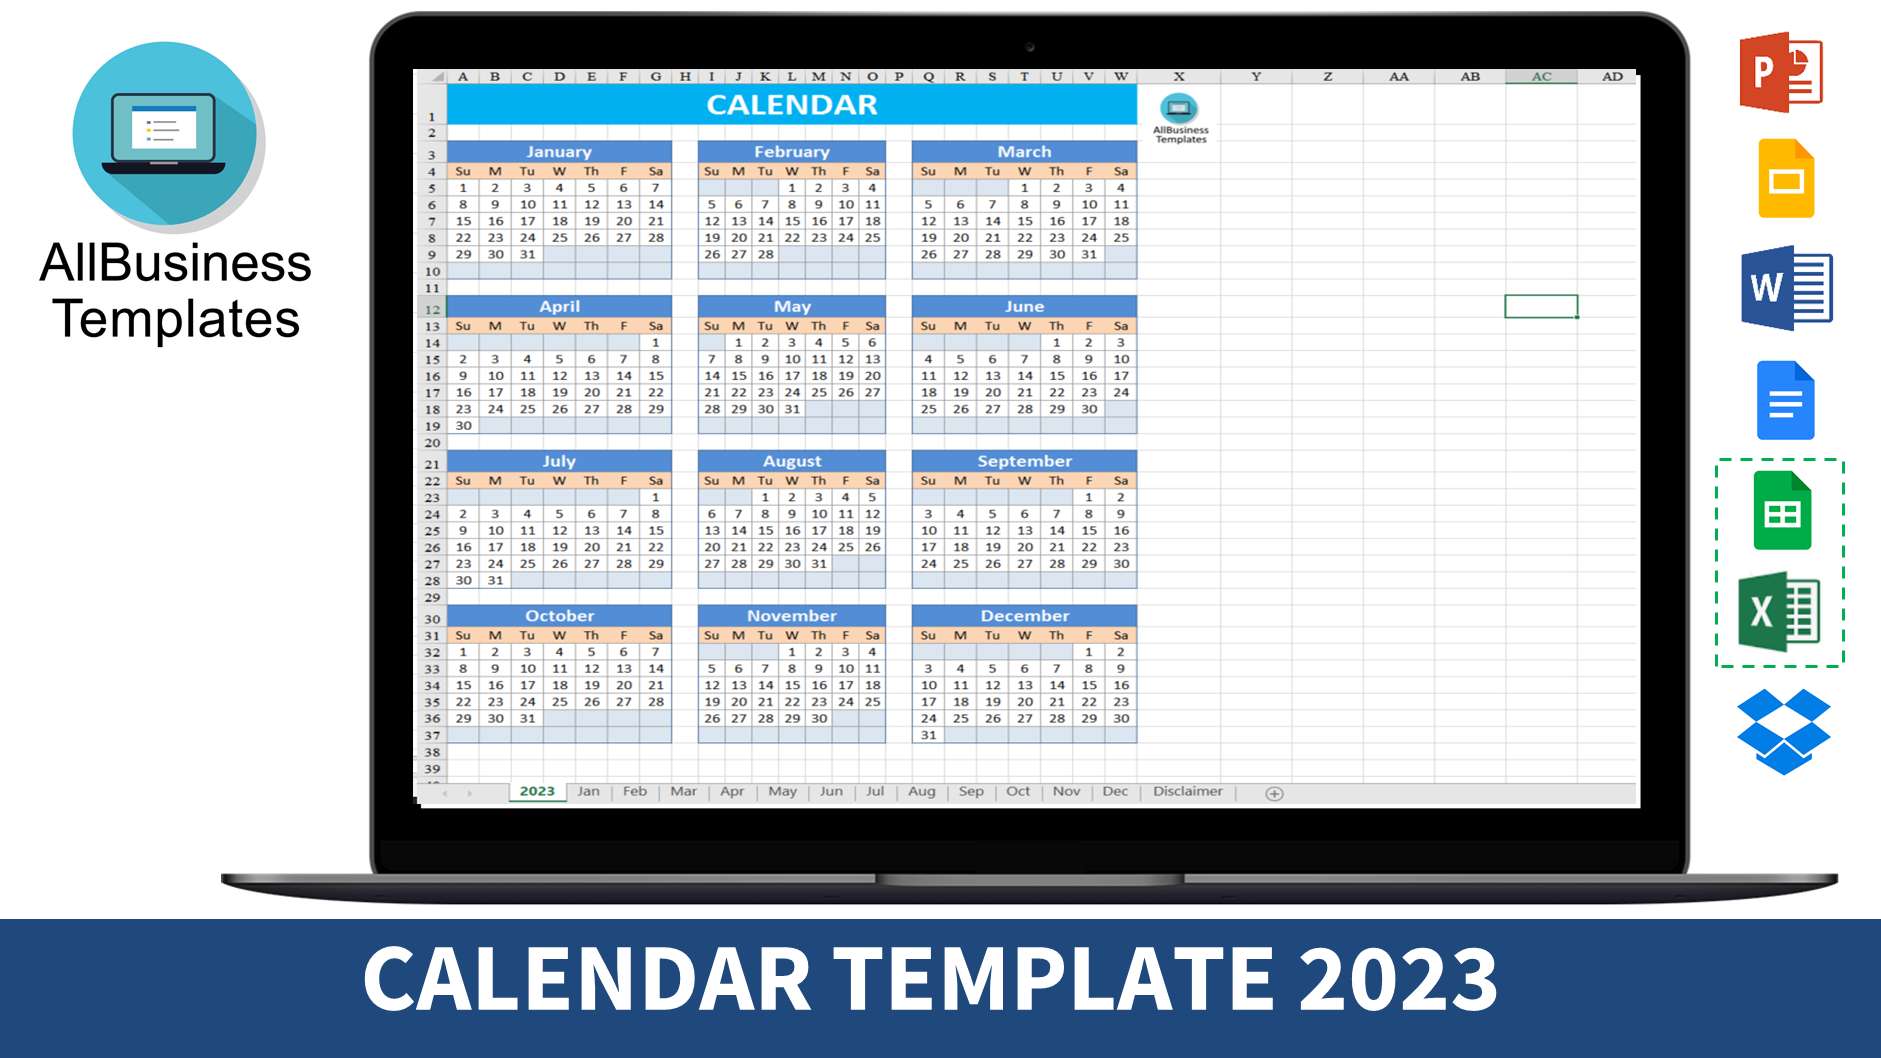 Calendar Template 2023 main image